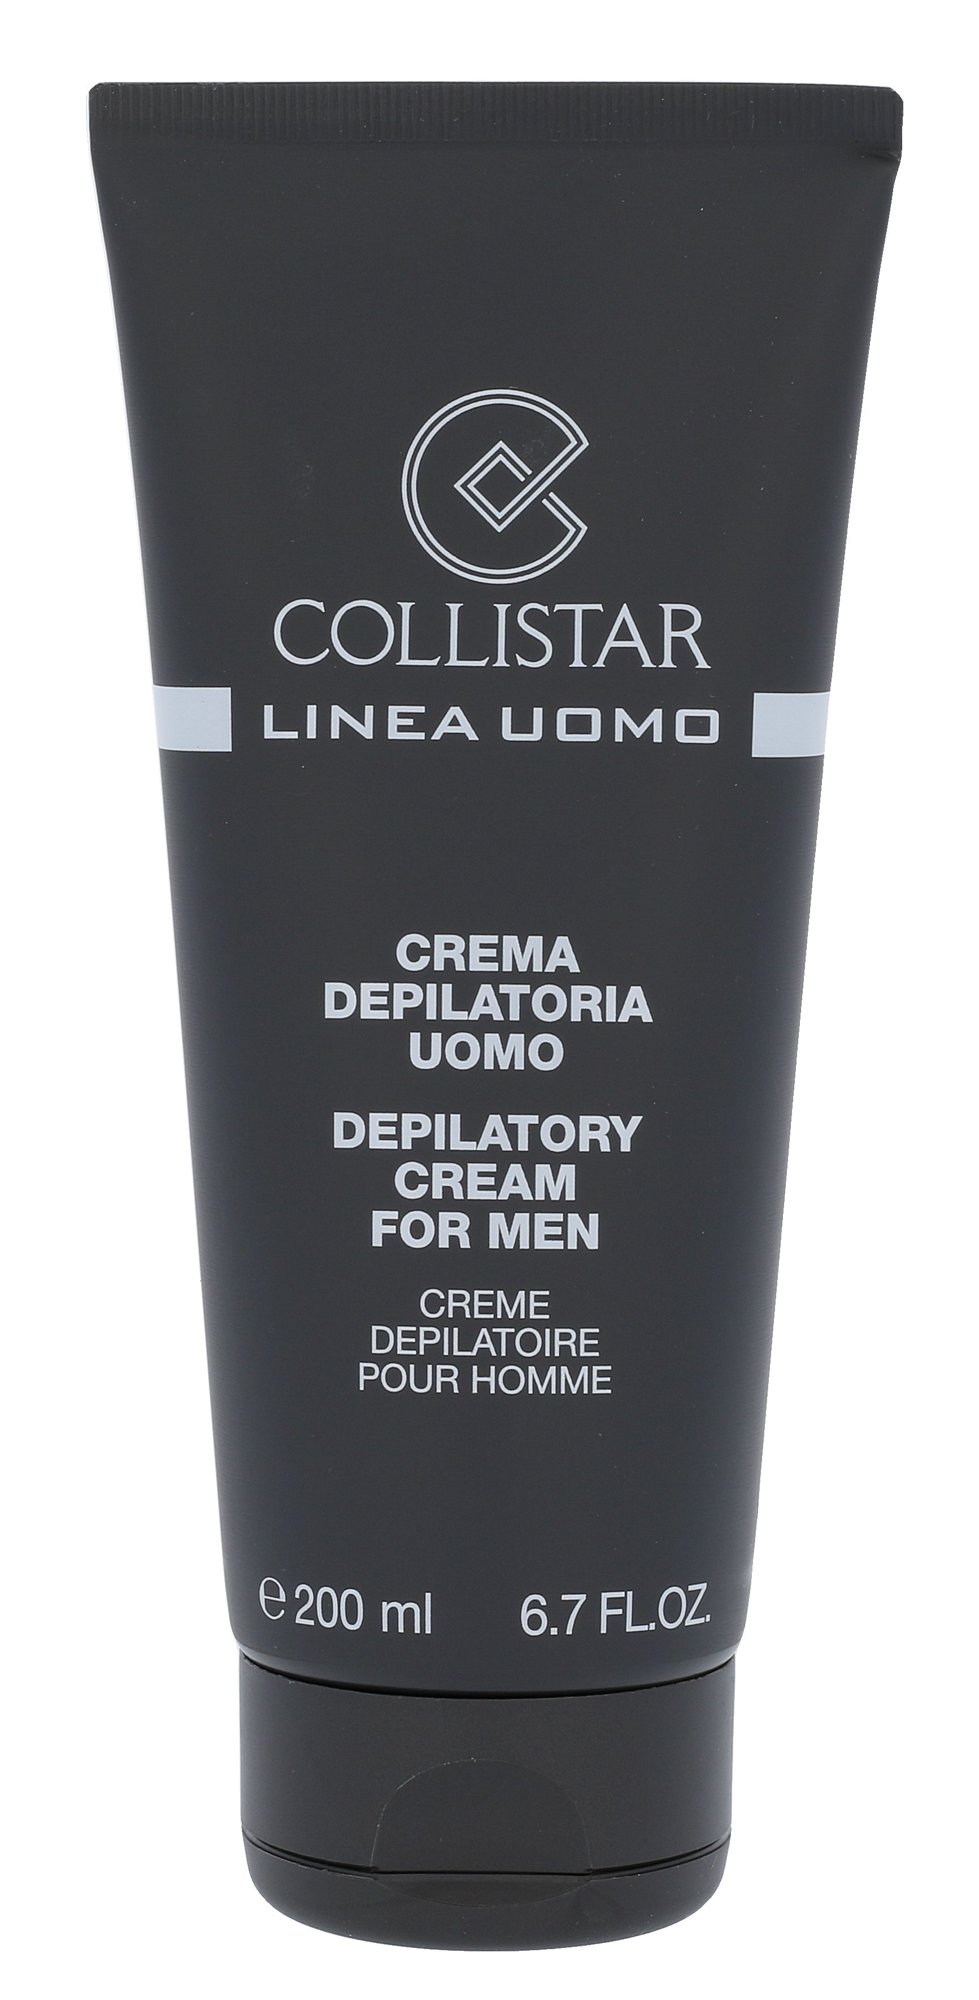 Collistar Linea Uomo Depilatory Cream For Men 200ml skutimosi kremas